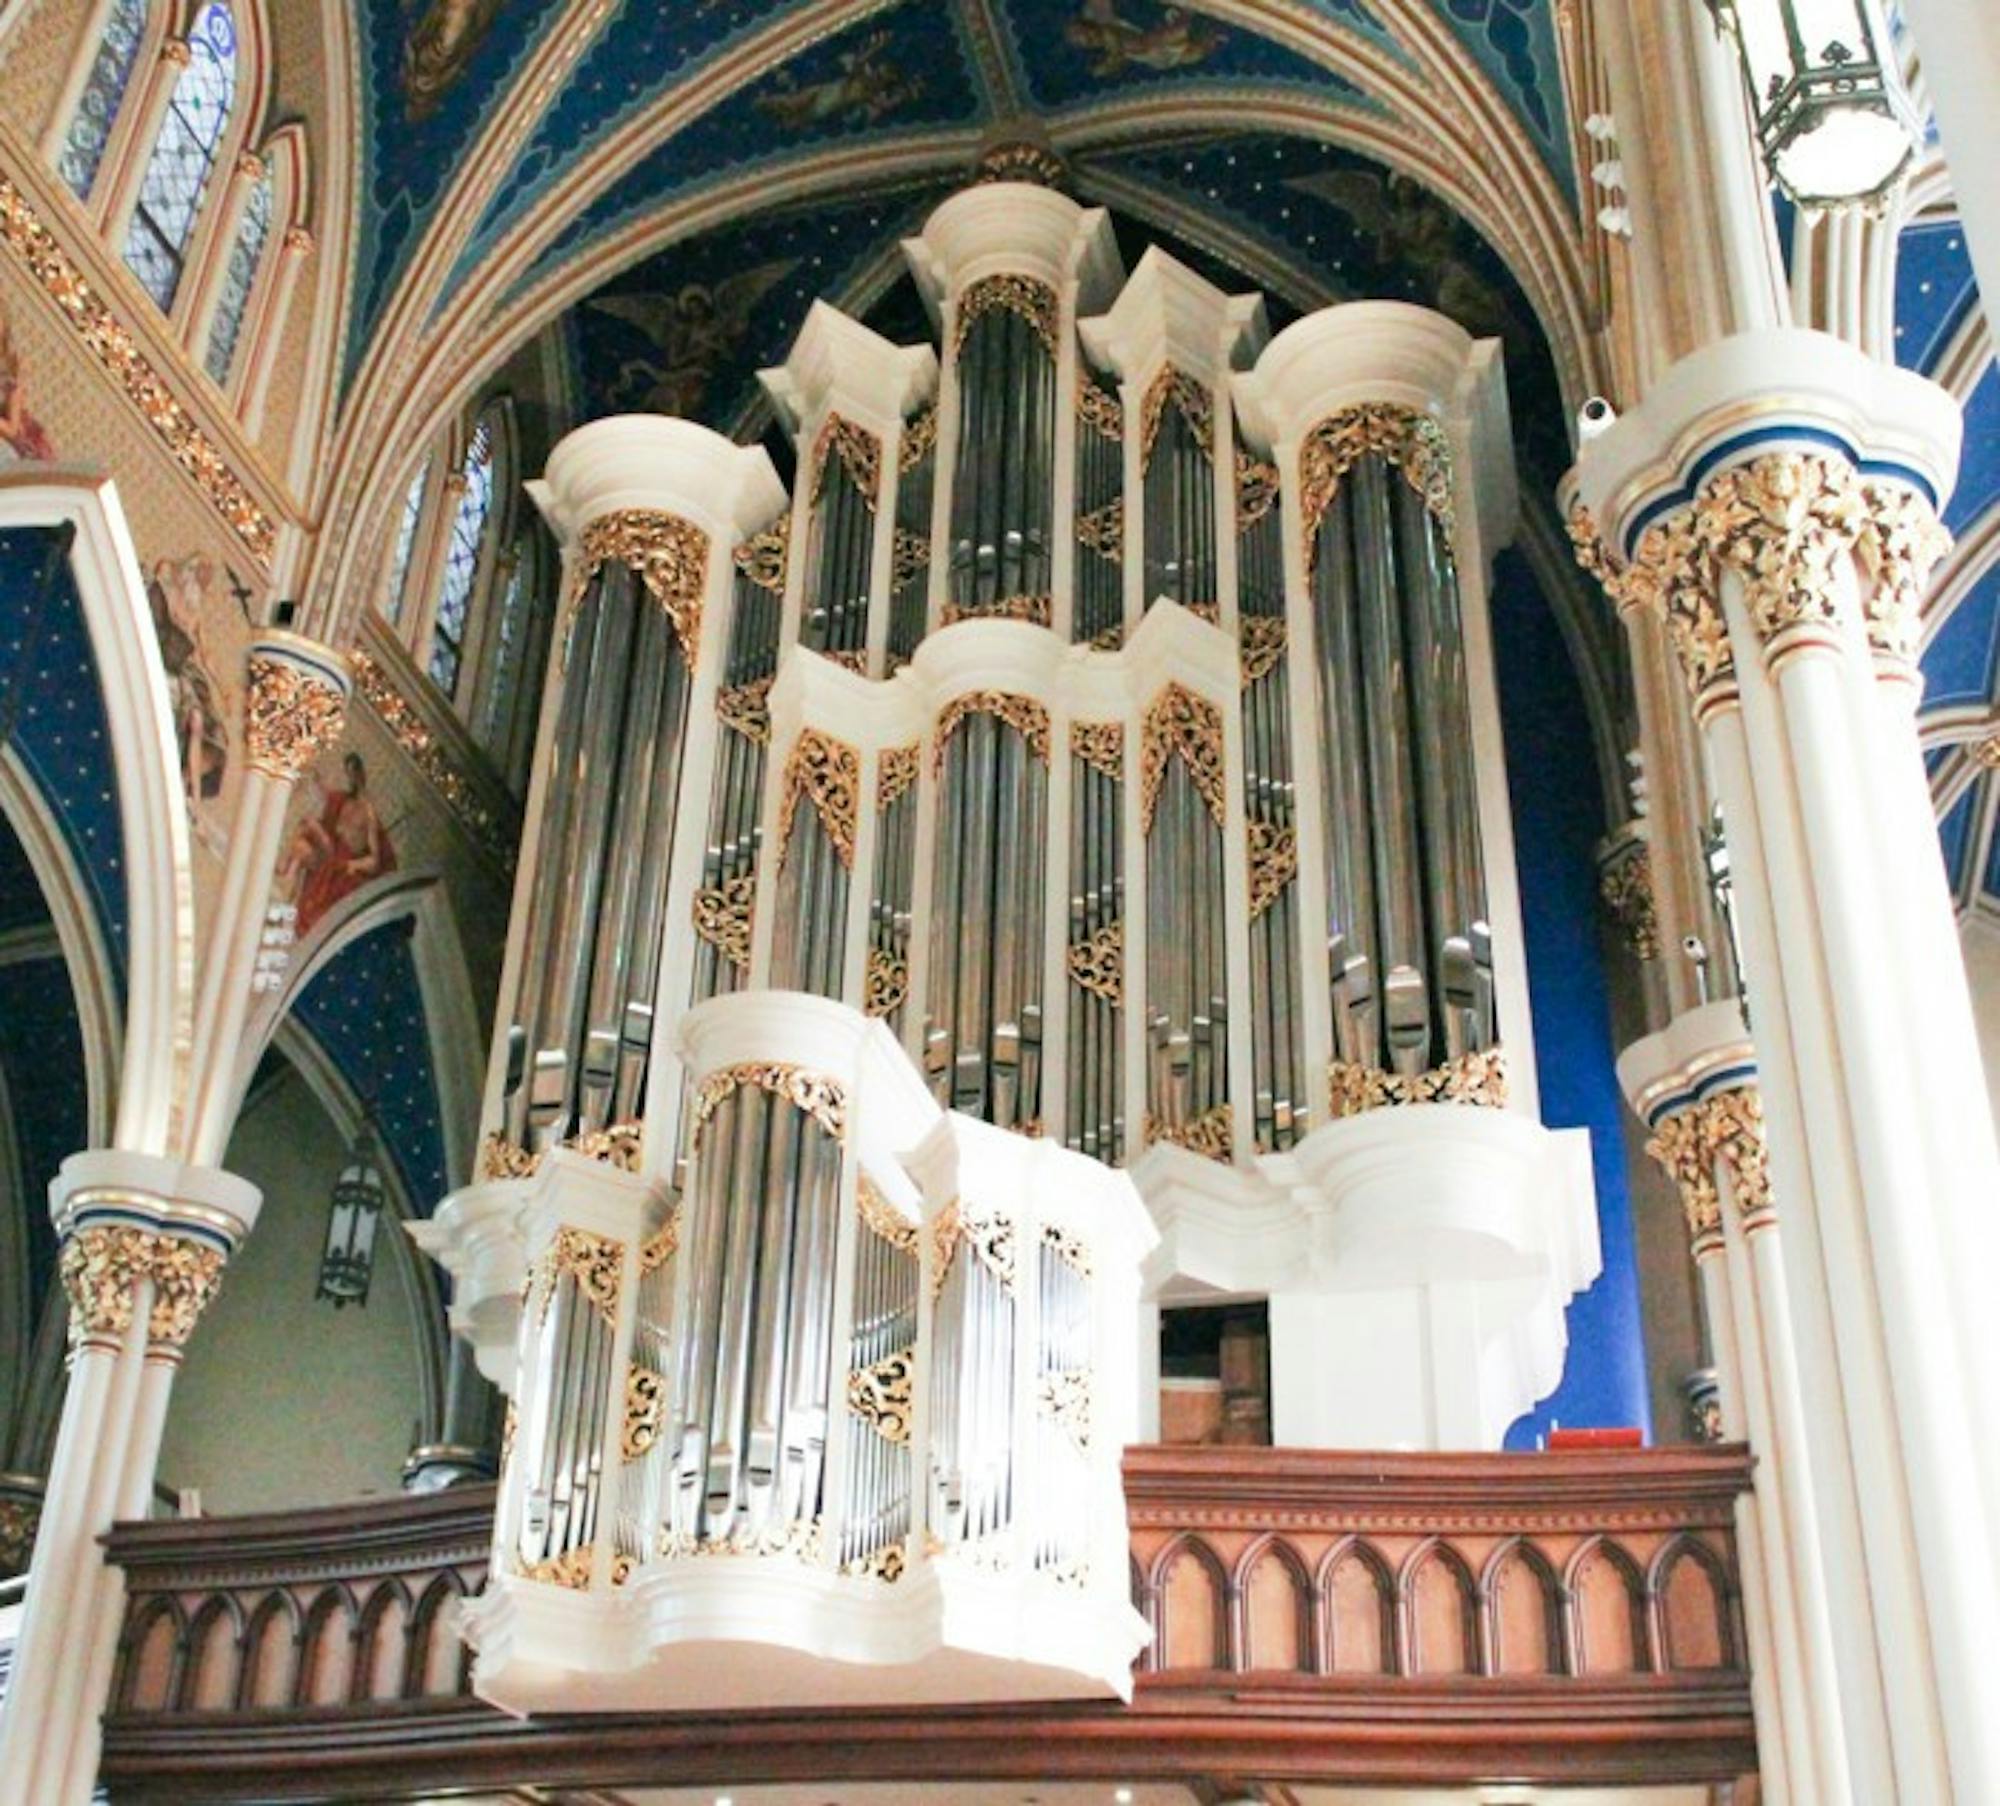 20160907, 20160907, Basilica of the Sacred Heart, new organ, Peter St. John